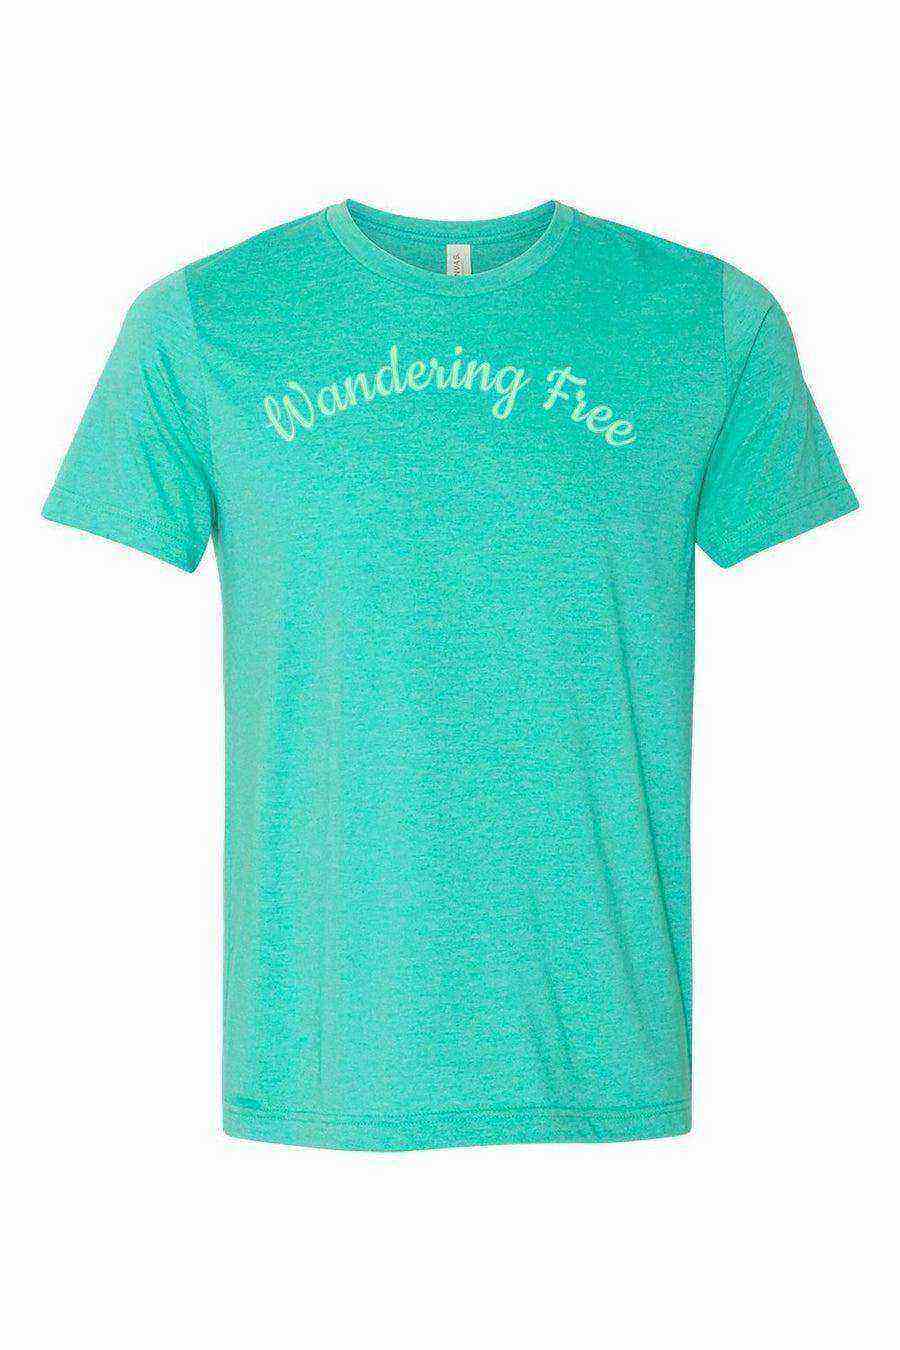 Youth | Wandering Free Shirt | Mermaid Shirt | Part Of Your World Shirt - Dylan's Tees